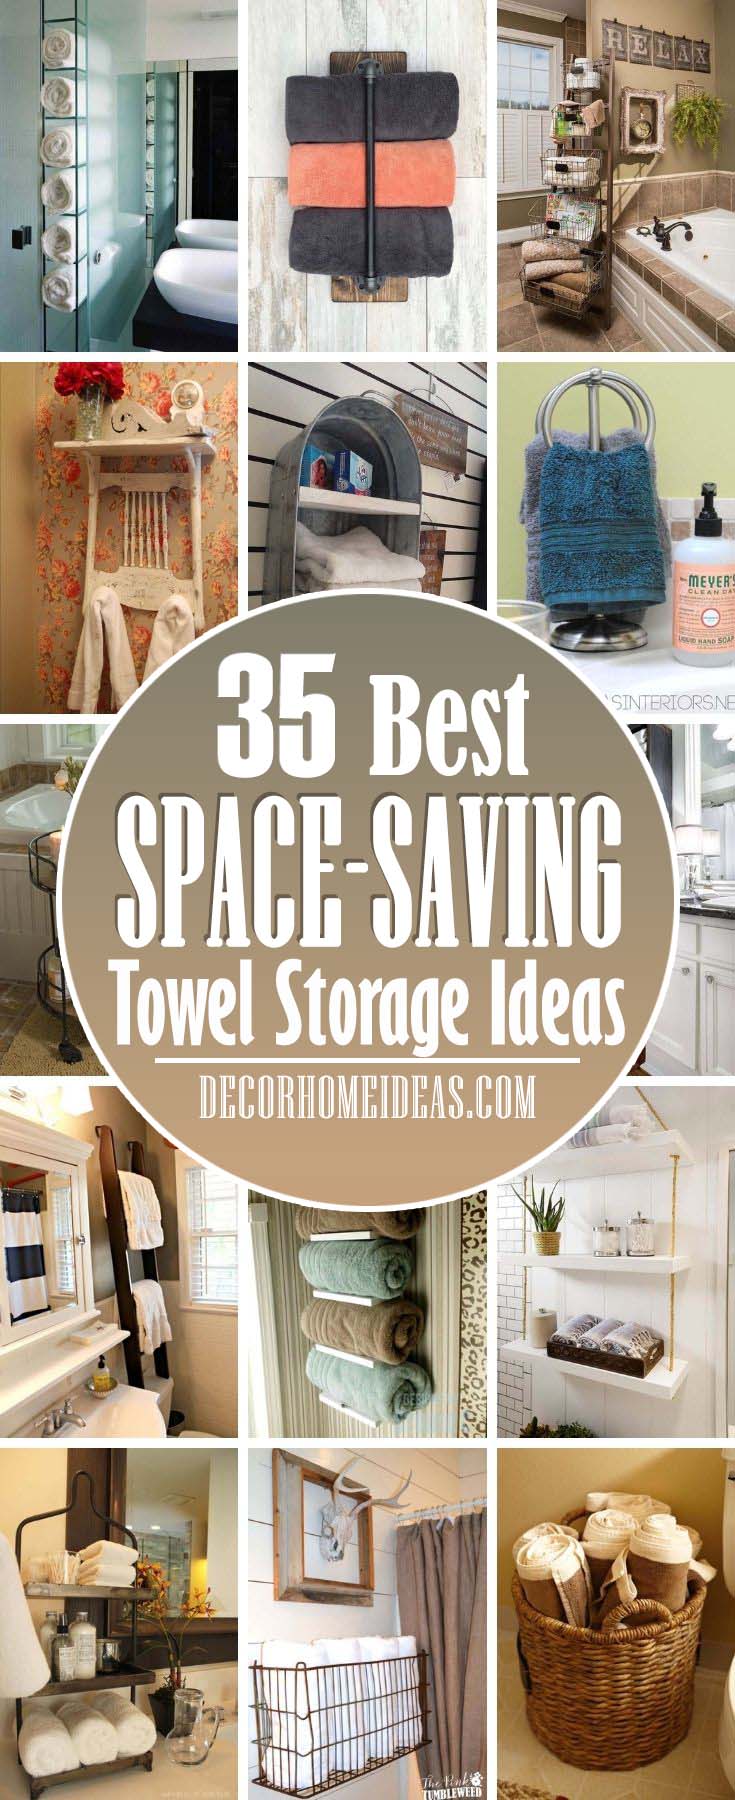 Space Saving Towel Storage Ideas, Bathroom Shelves Ideas For Towels